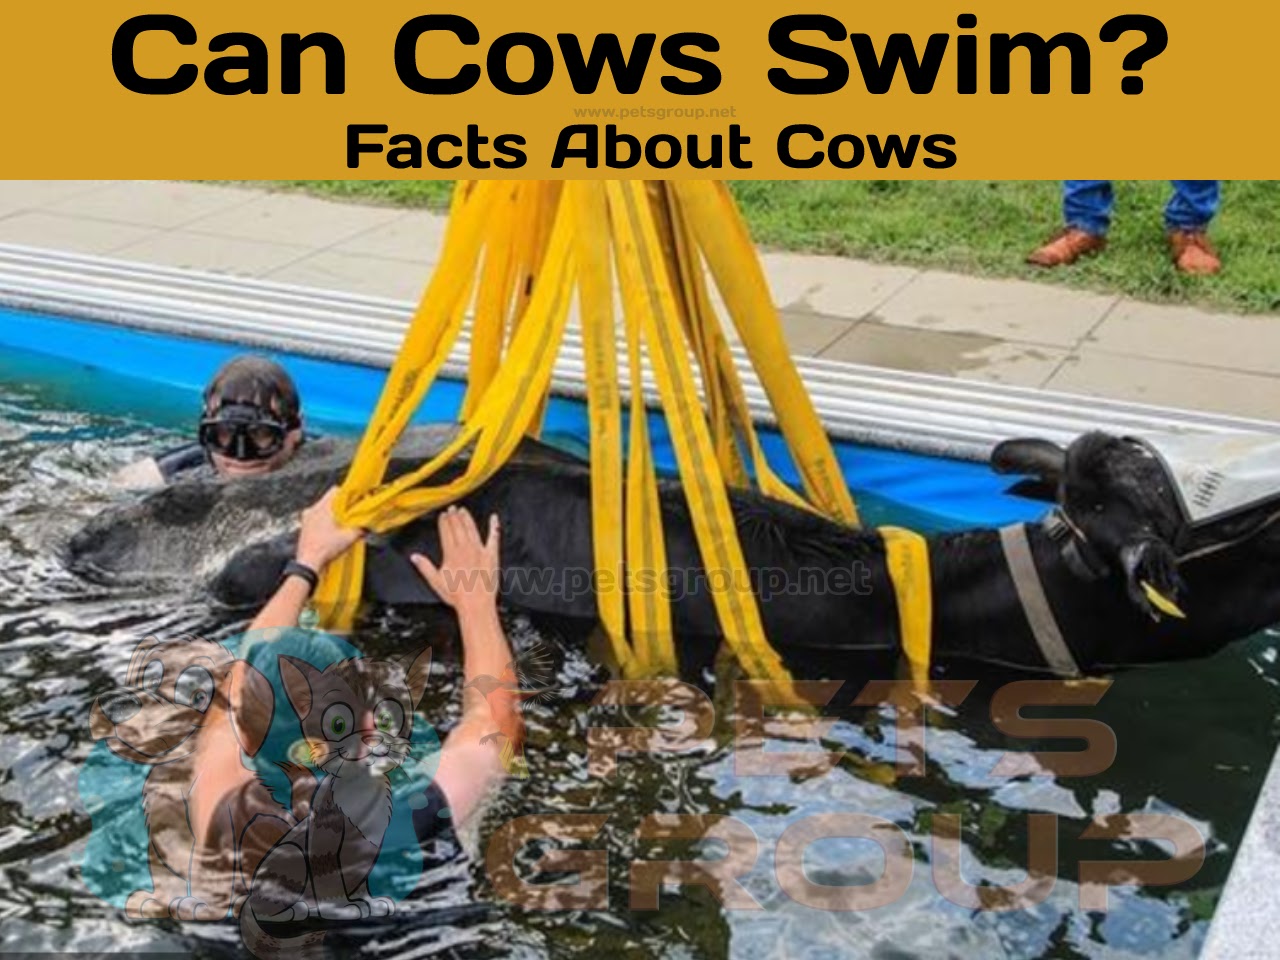 Can cows swim